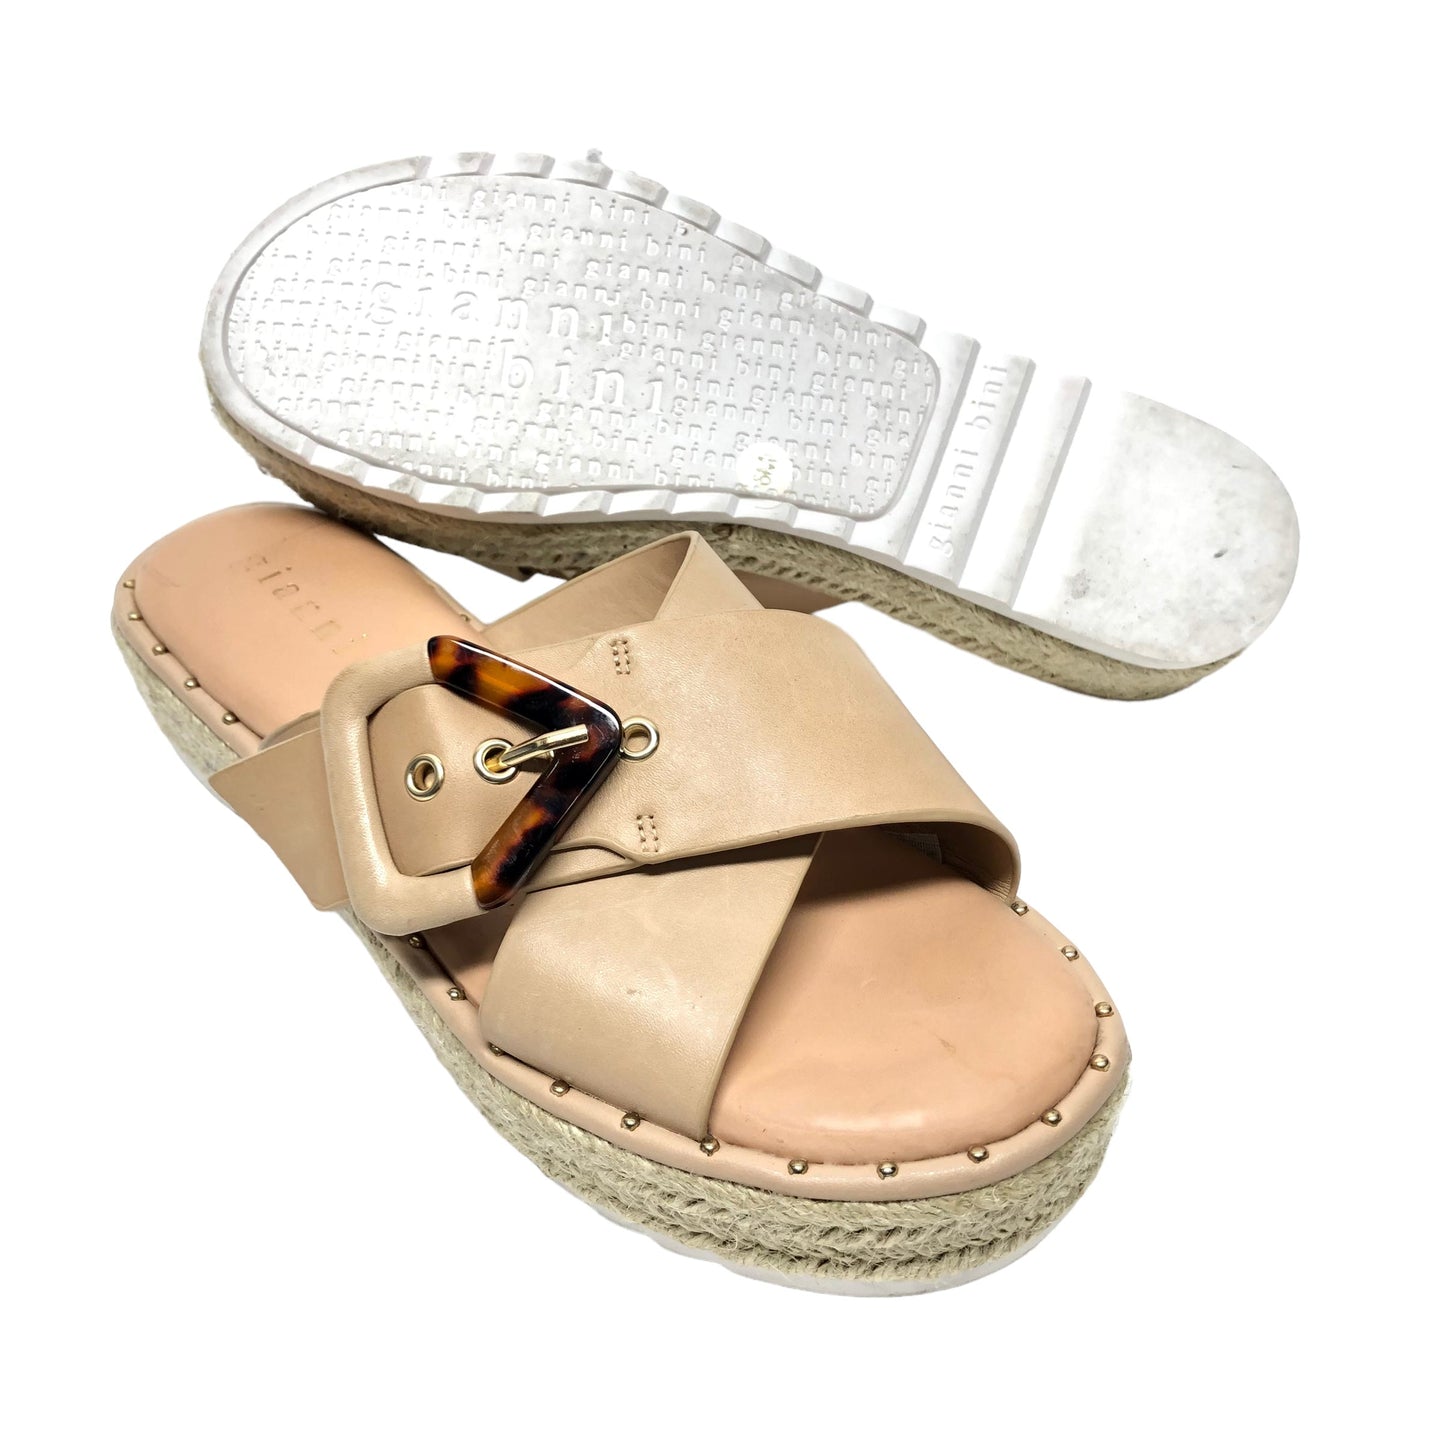 Sandals Heels Platform By Gianni Bini  Size: 6